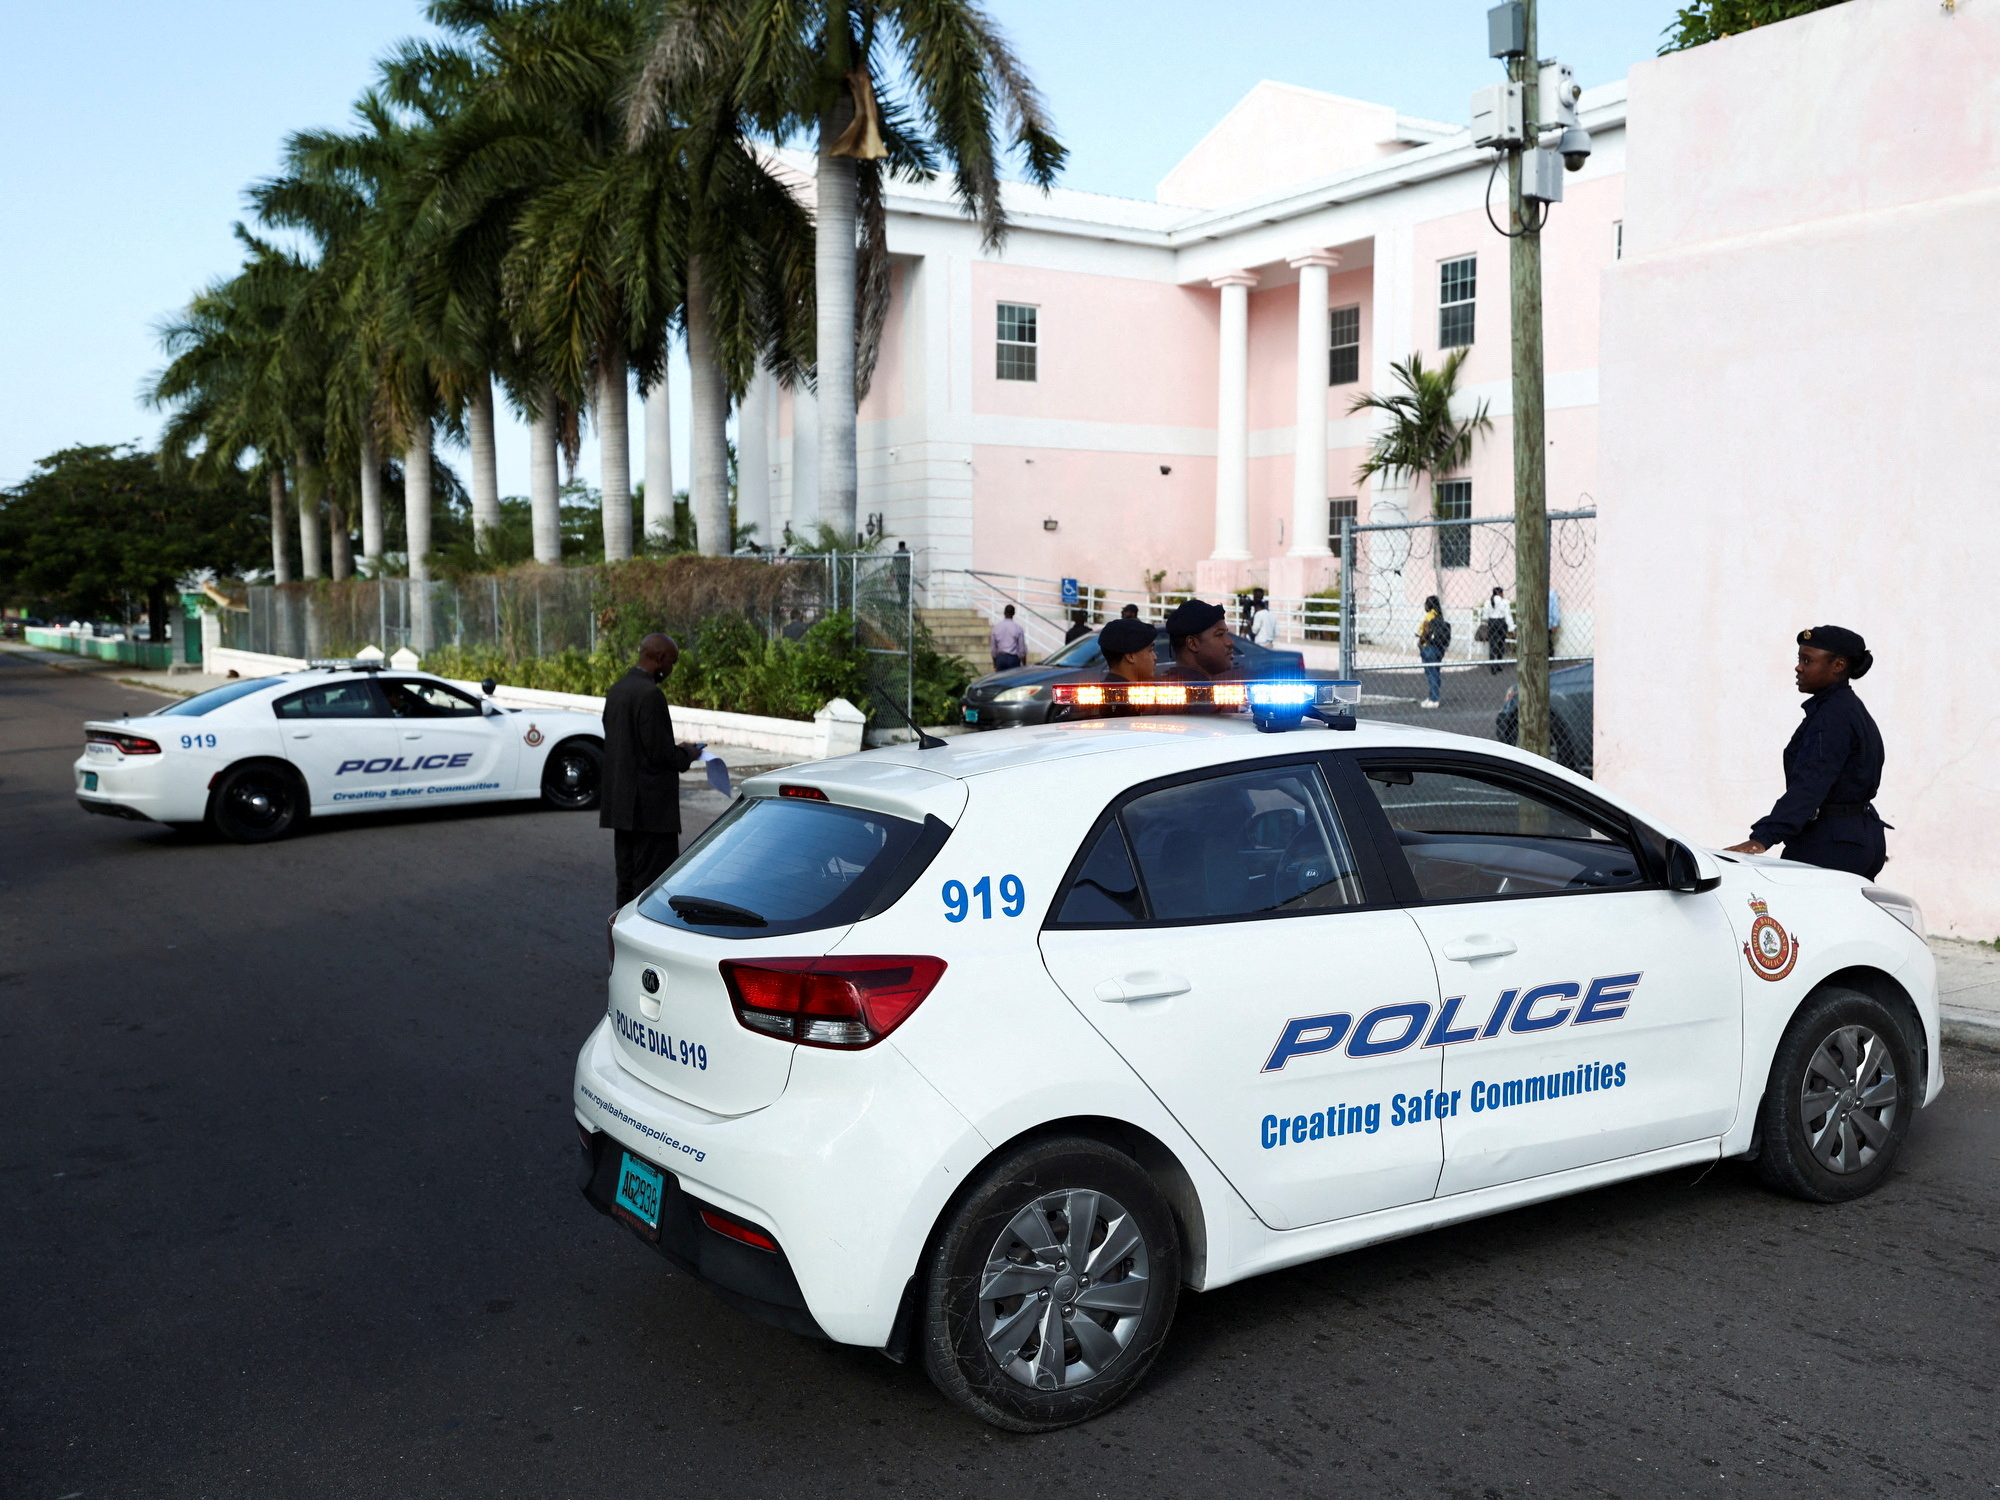 Los tribunales de Nassau donde fue detenido Bankman-Fried
REUTERS/Dante Carrer/File Photo